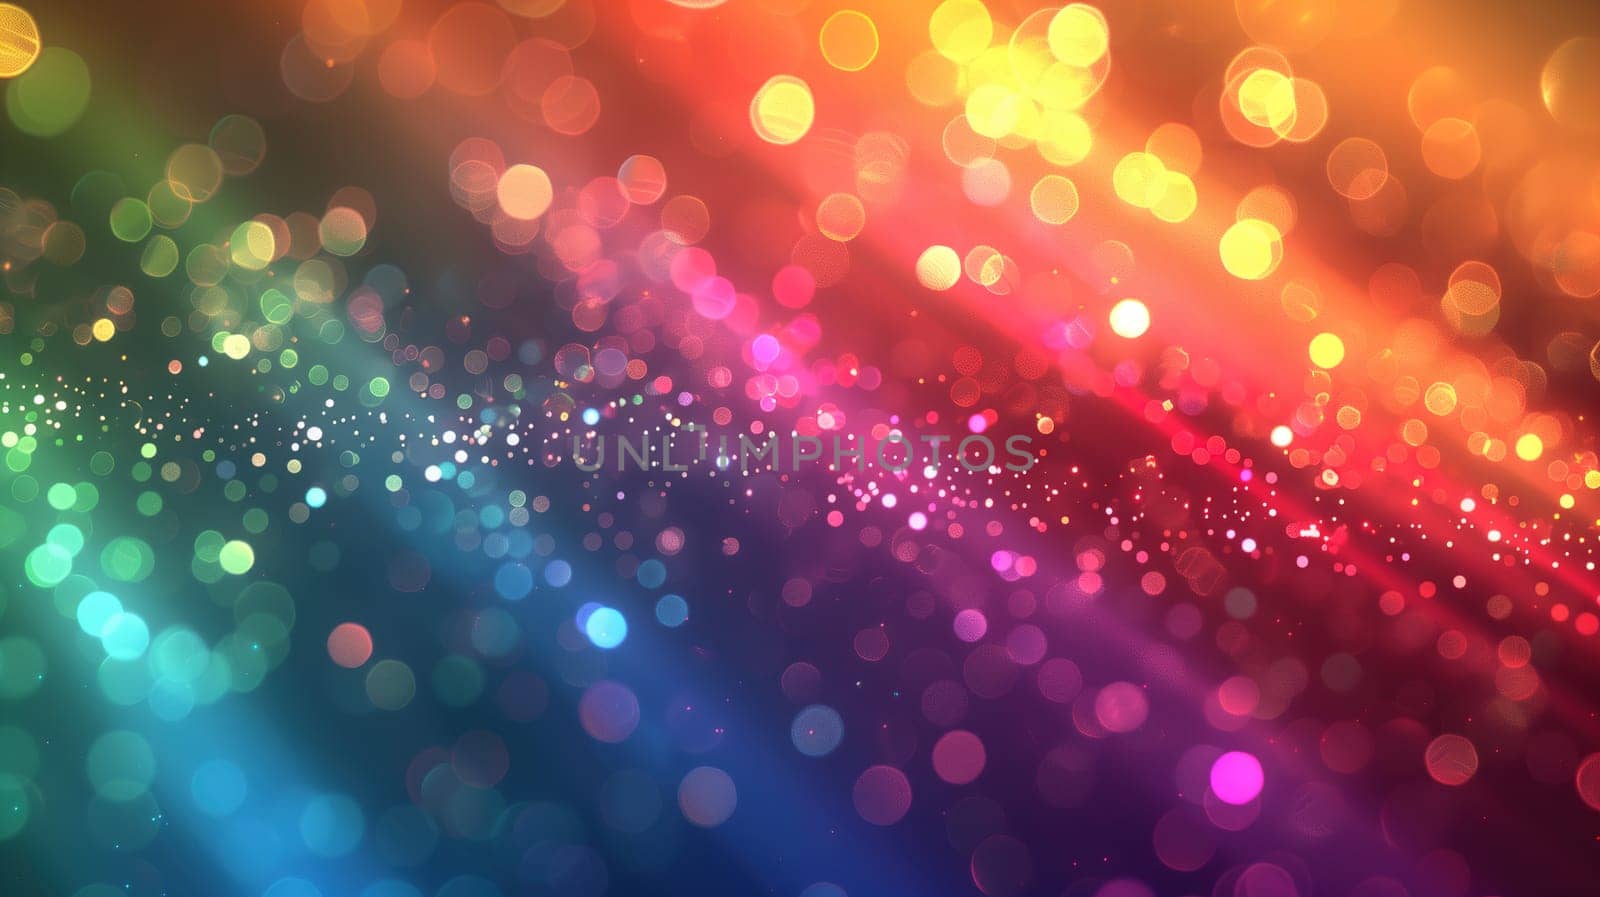 Vibrant Rainbow Glitter Sparkling to Celebrate LGBT Pride by TRMK